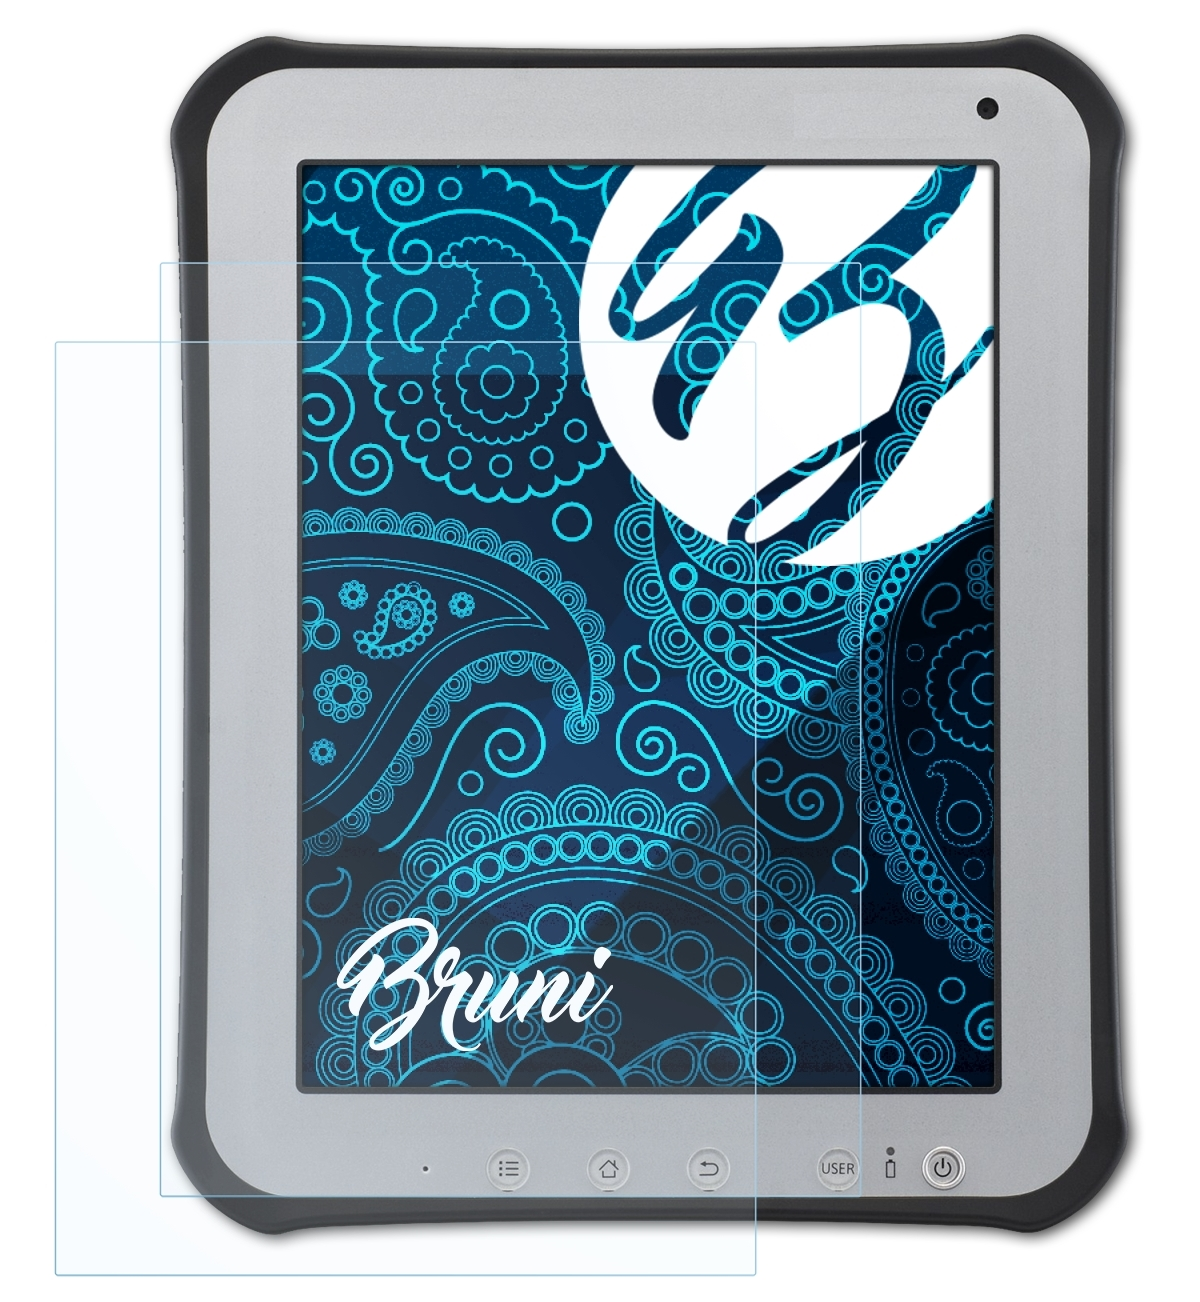 BRUNI ToughPad FZ-A1) 2x Schutzfolie(für Basics-Clear Panasonic